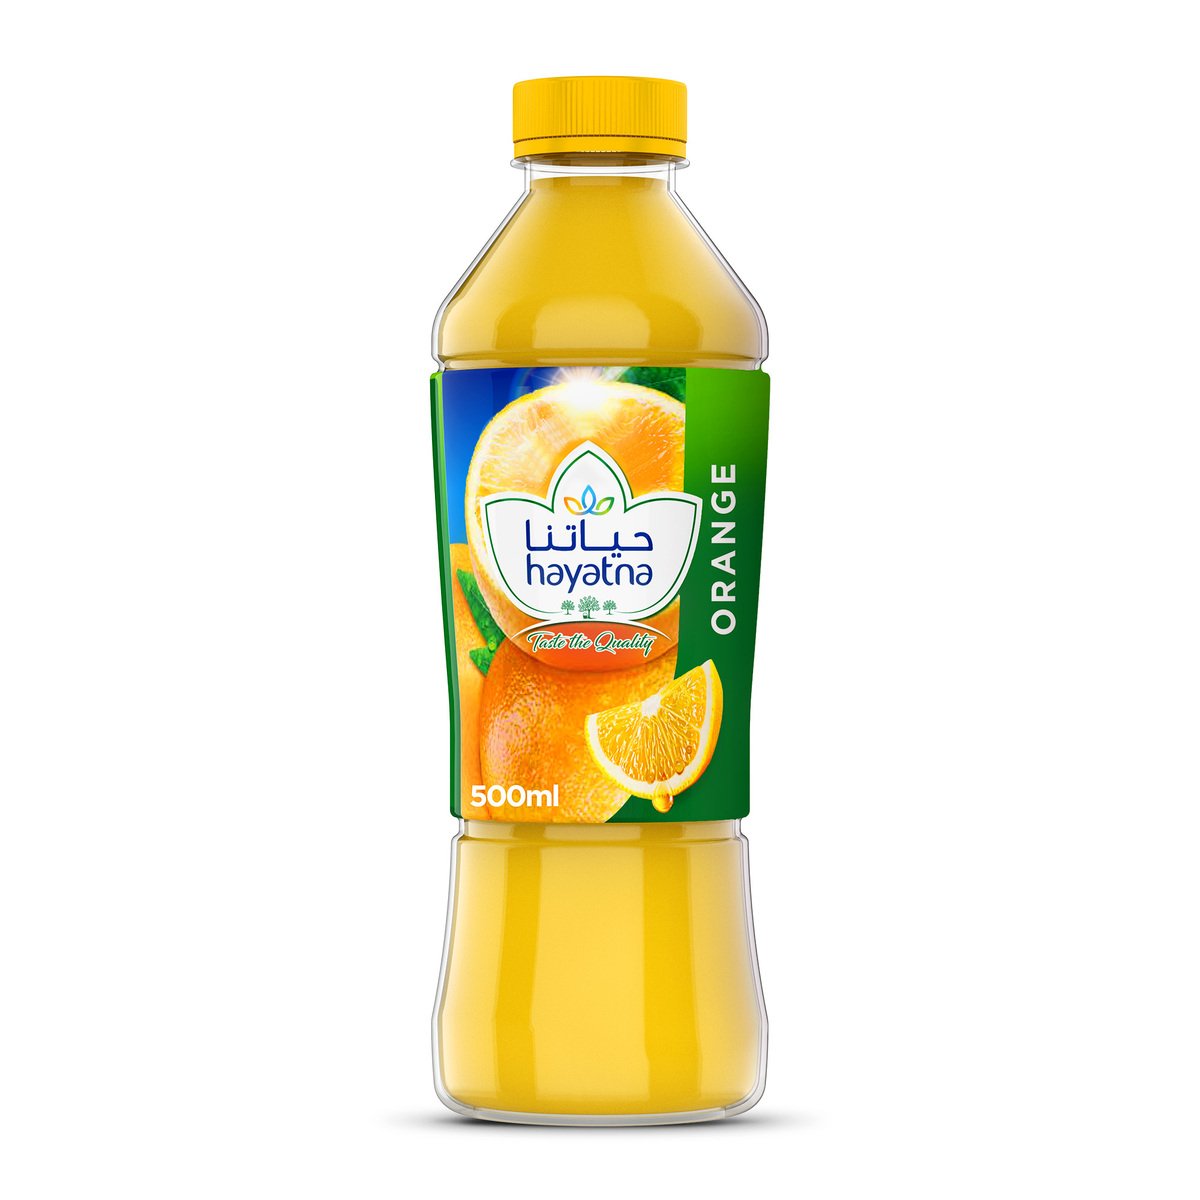 Hayatna No Added Sugar 100% Pure Orange Juice 500 ml